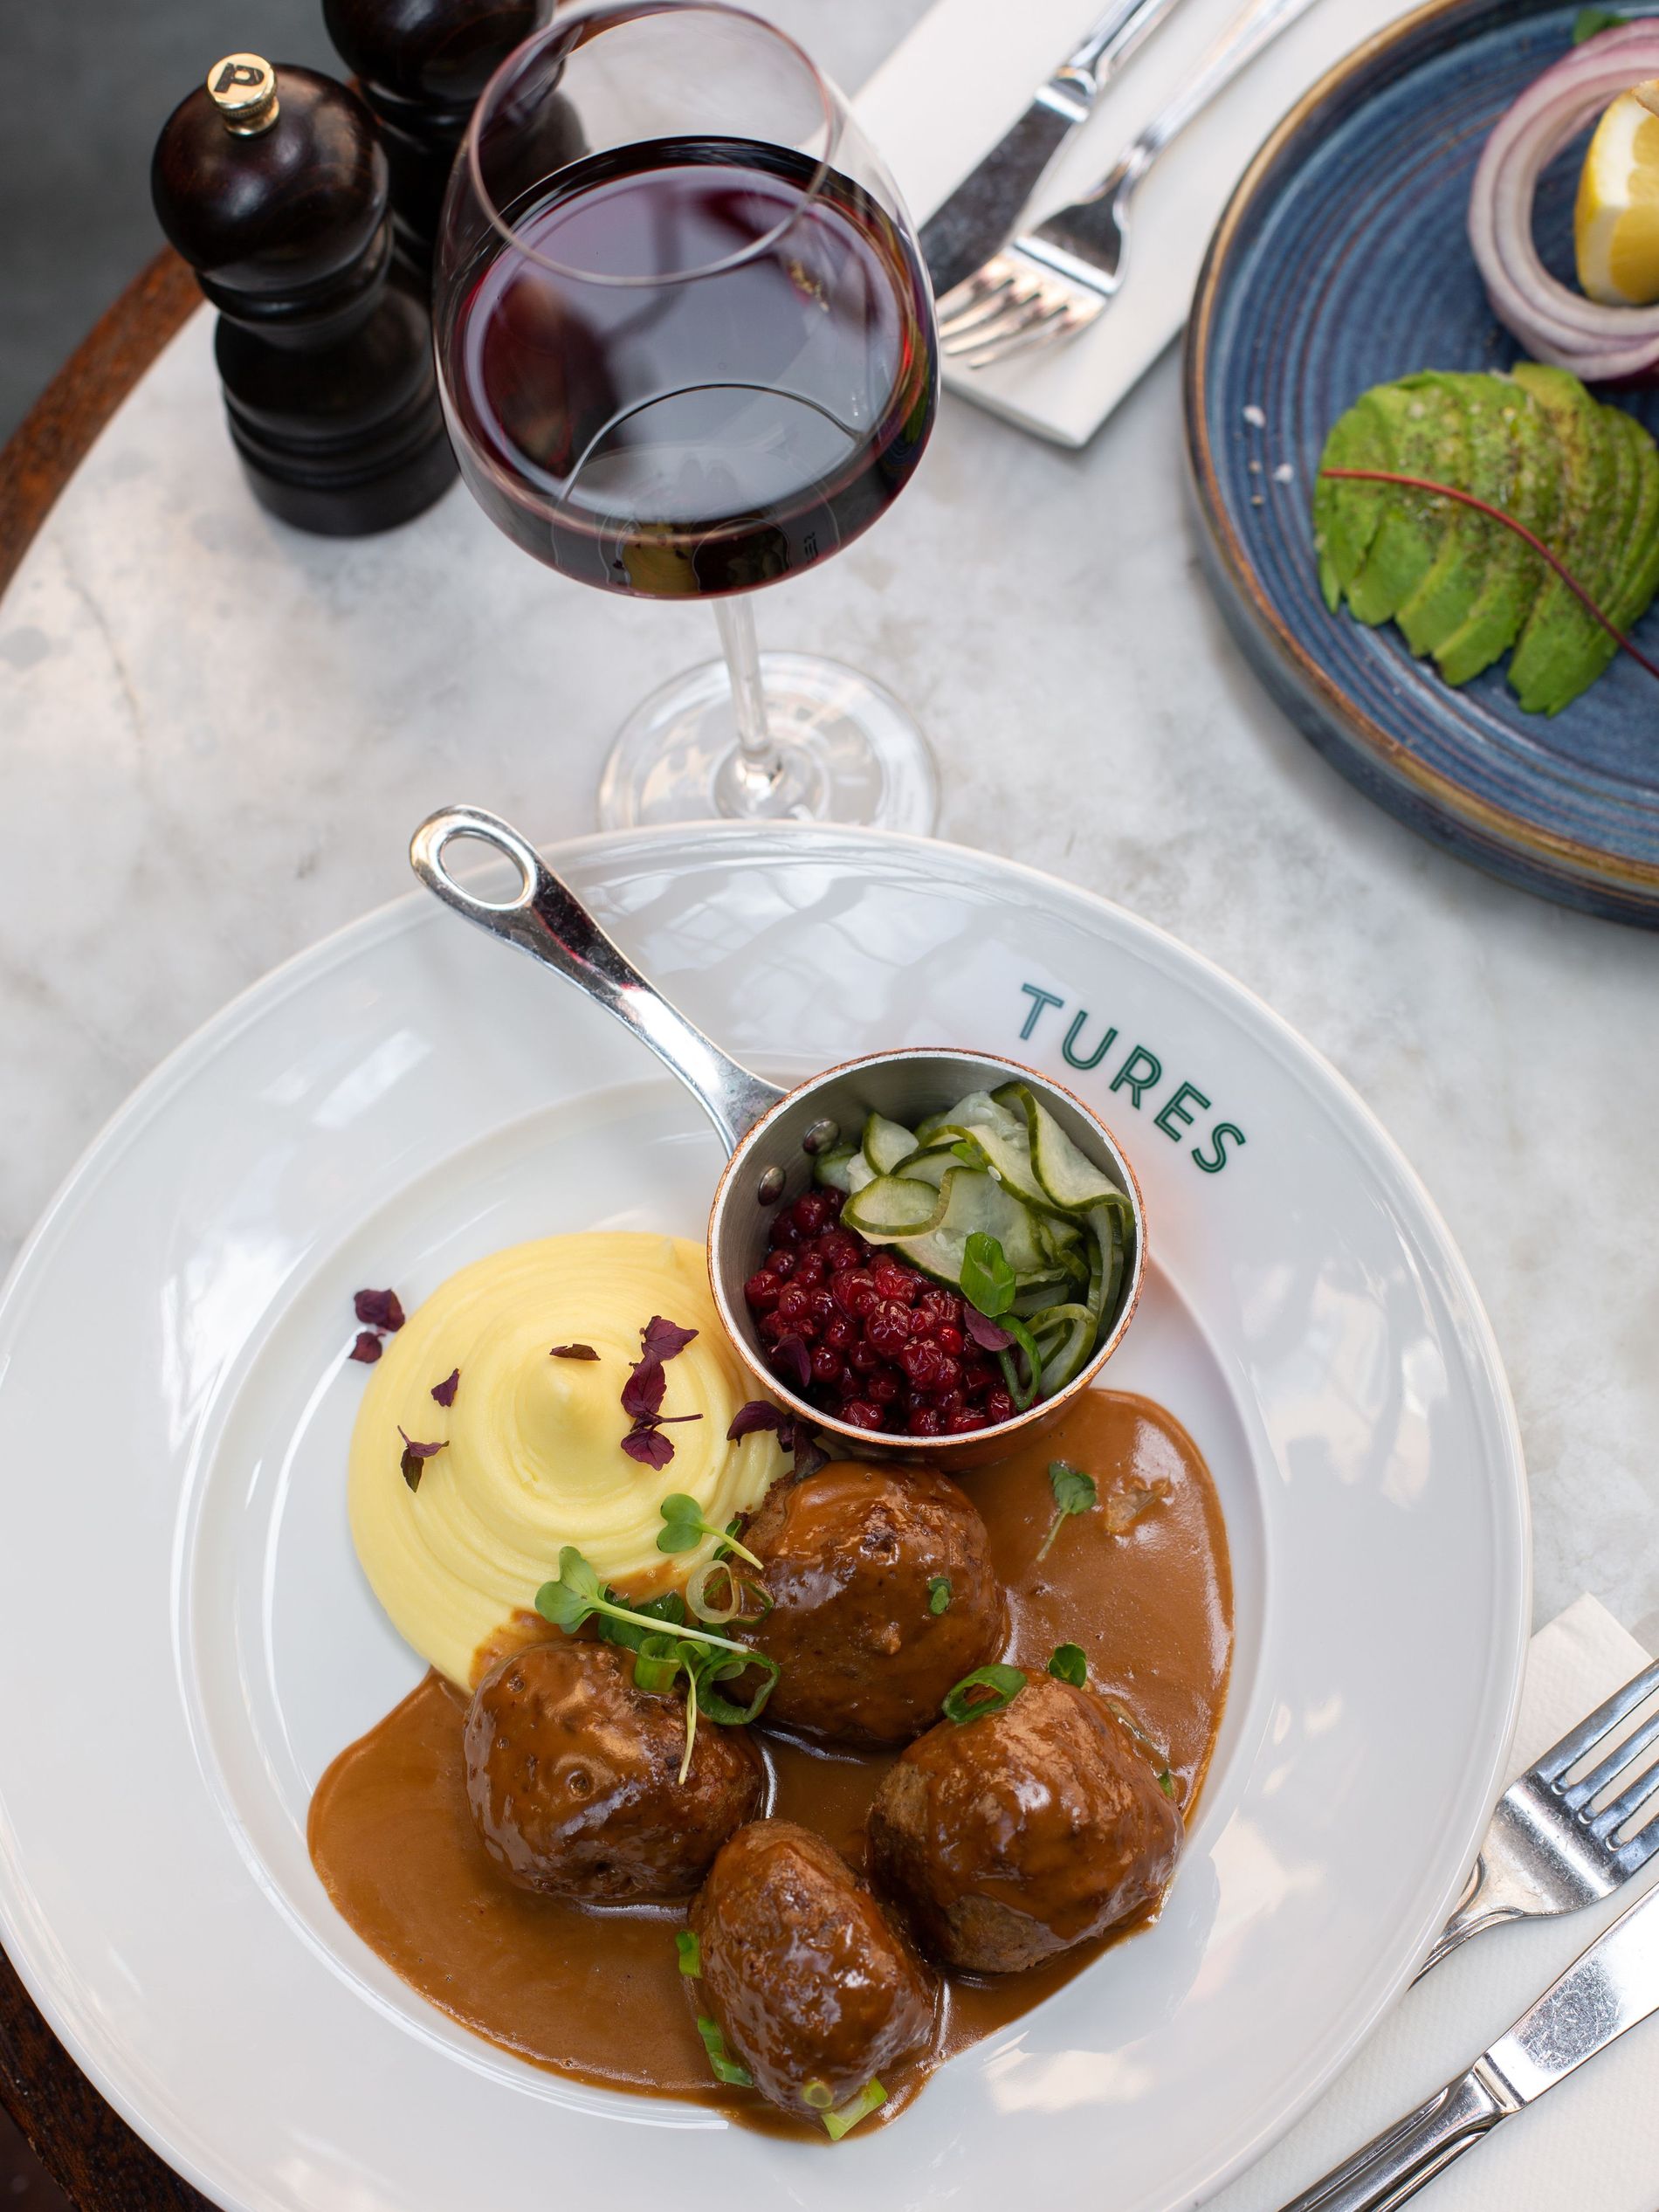 Meatballs are best served at restaurant Tures in Sturegallerian